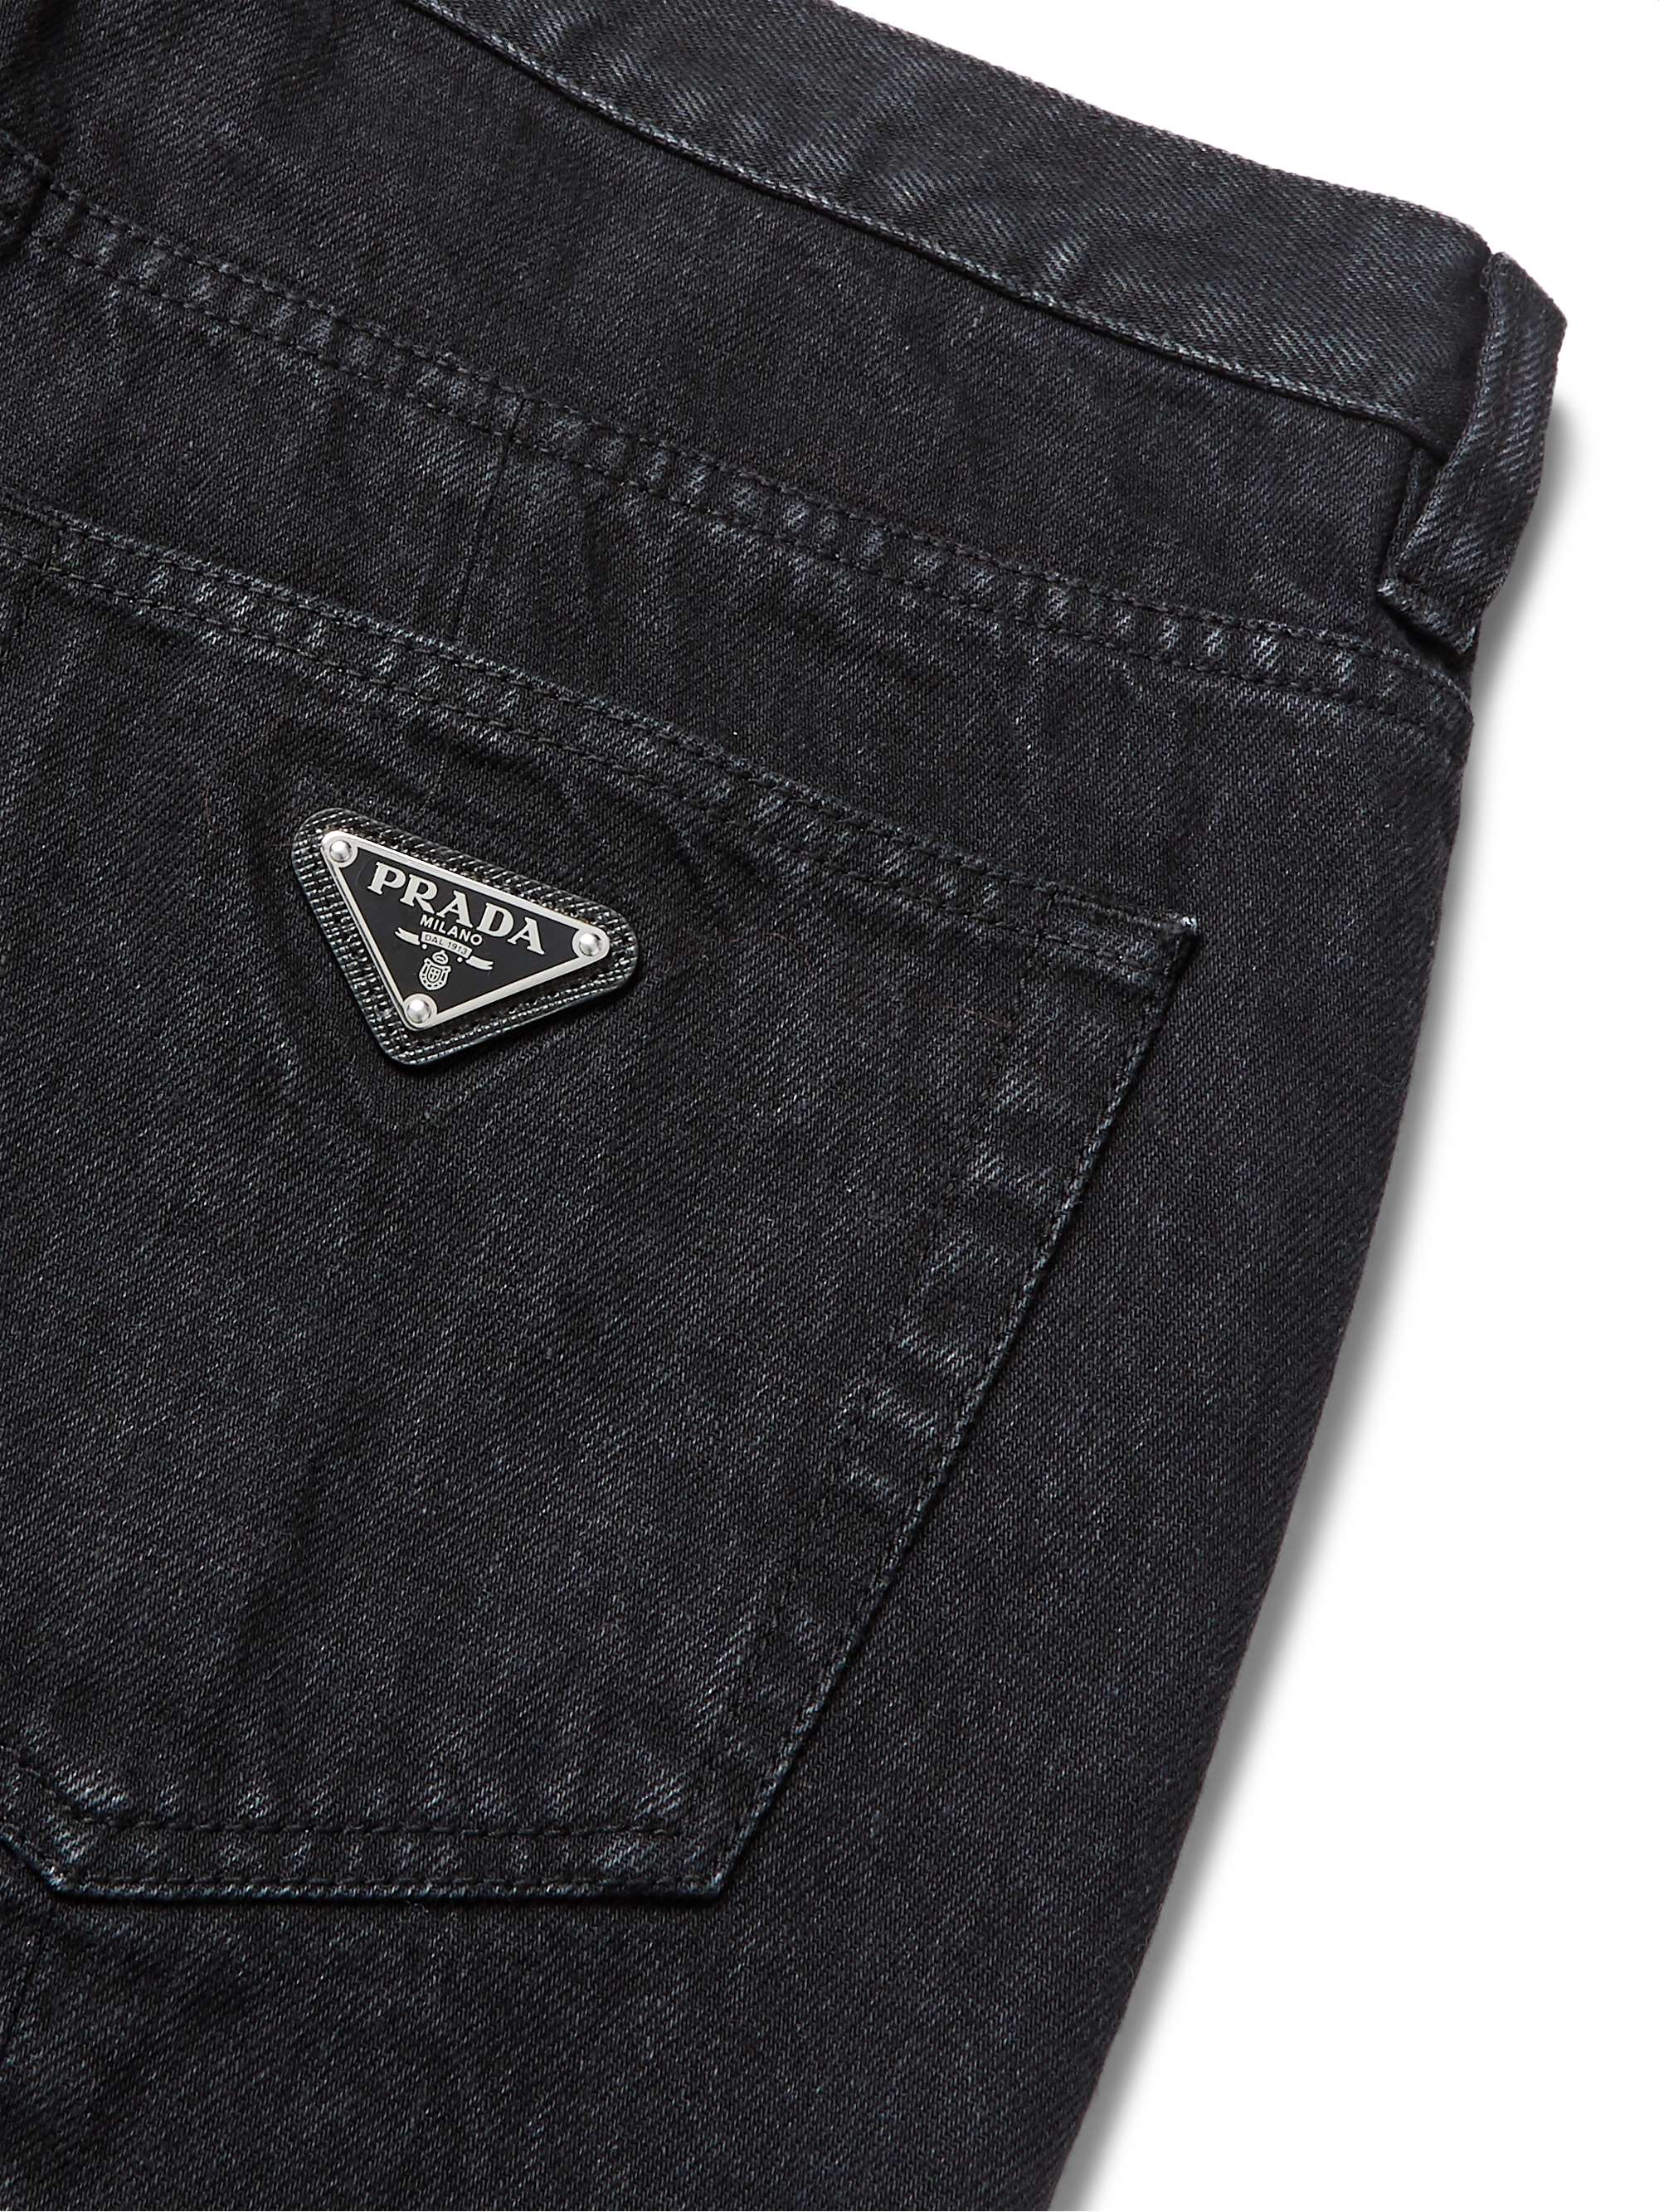 PRADA Cropped Logo-Appliquéd Denim Jeans